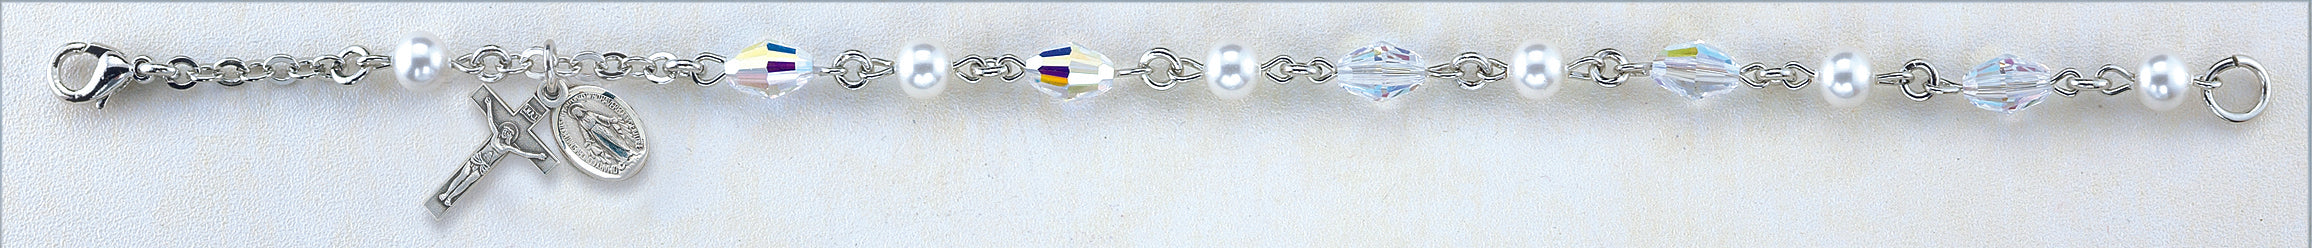 6mm Pearl and Swarovski Crystal Bracelet